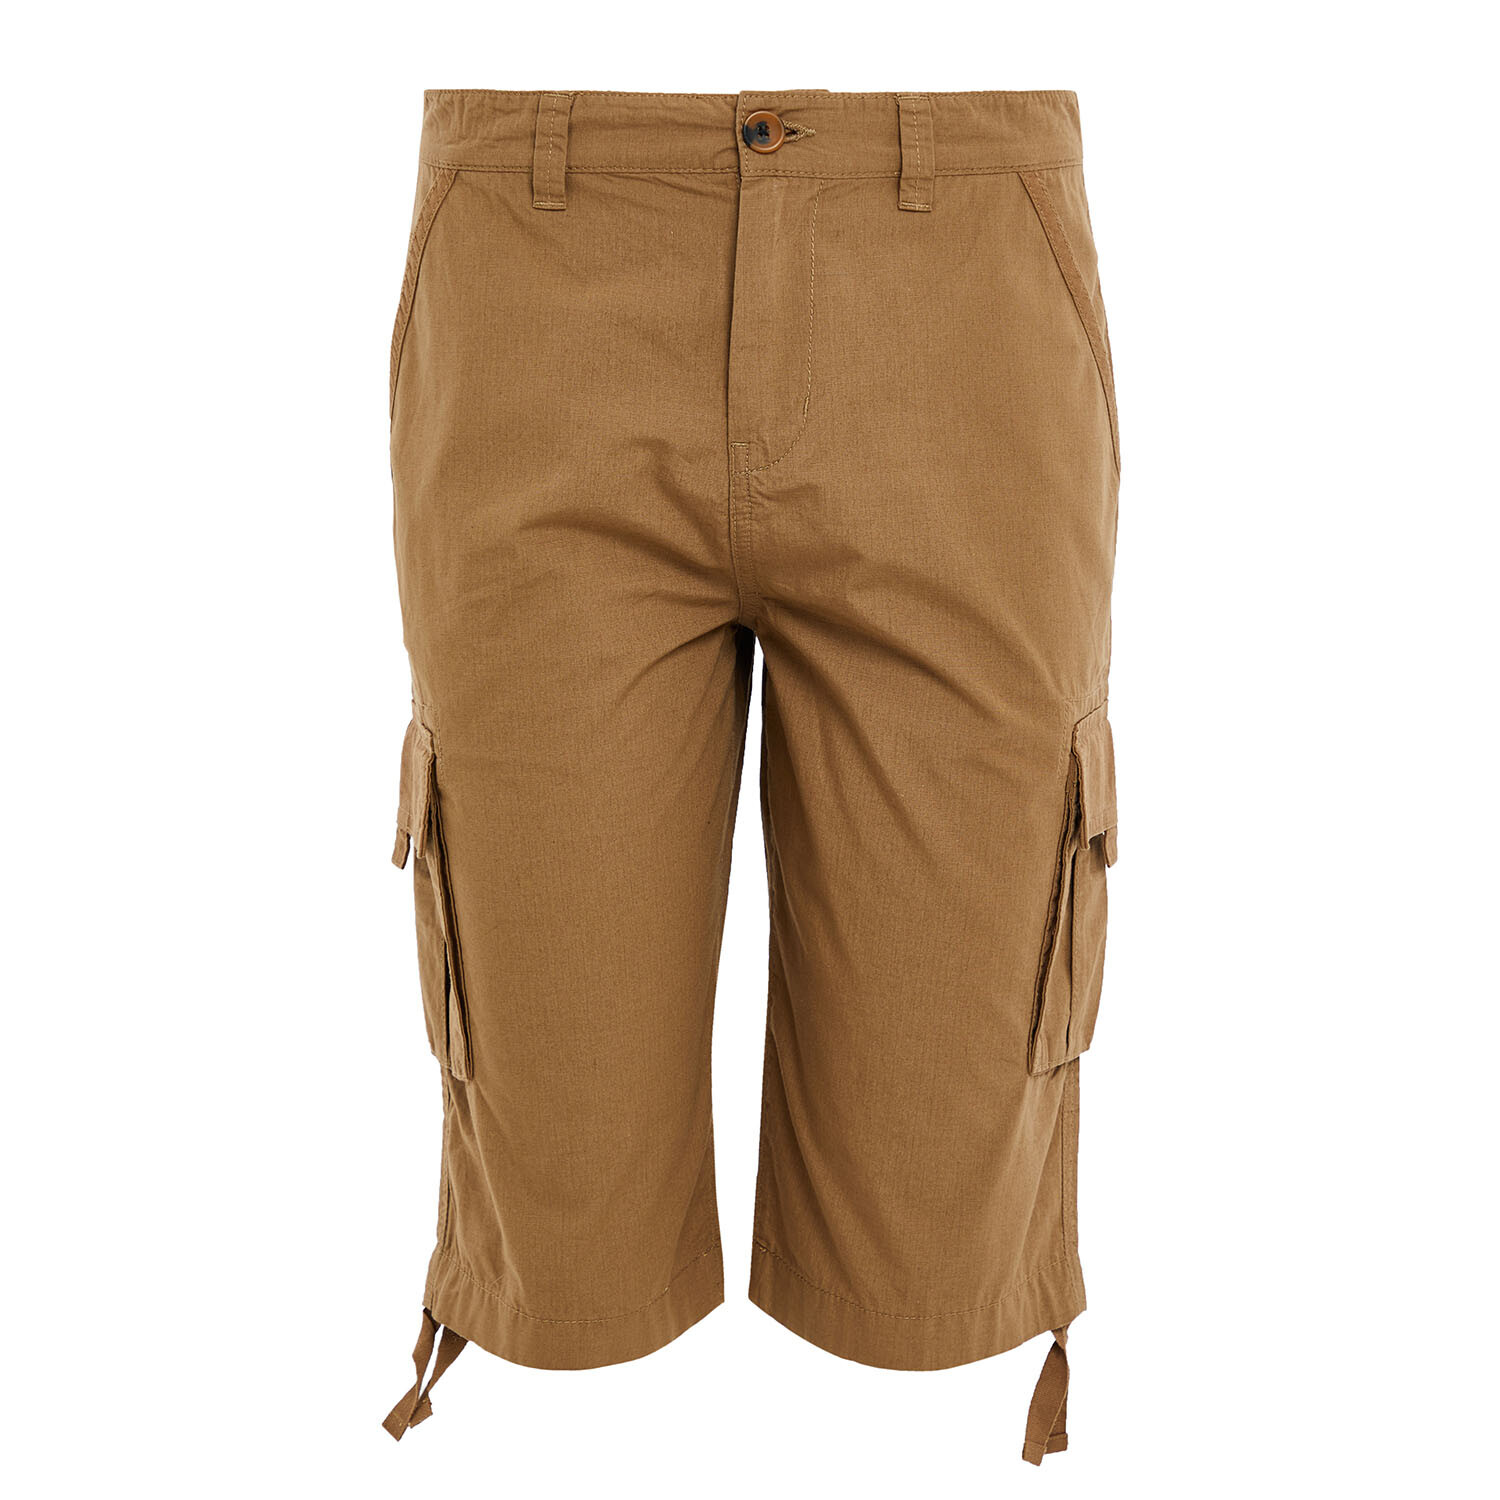 Men's 3/4 Length Shorts - Camel / M Image